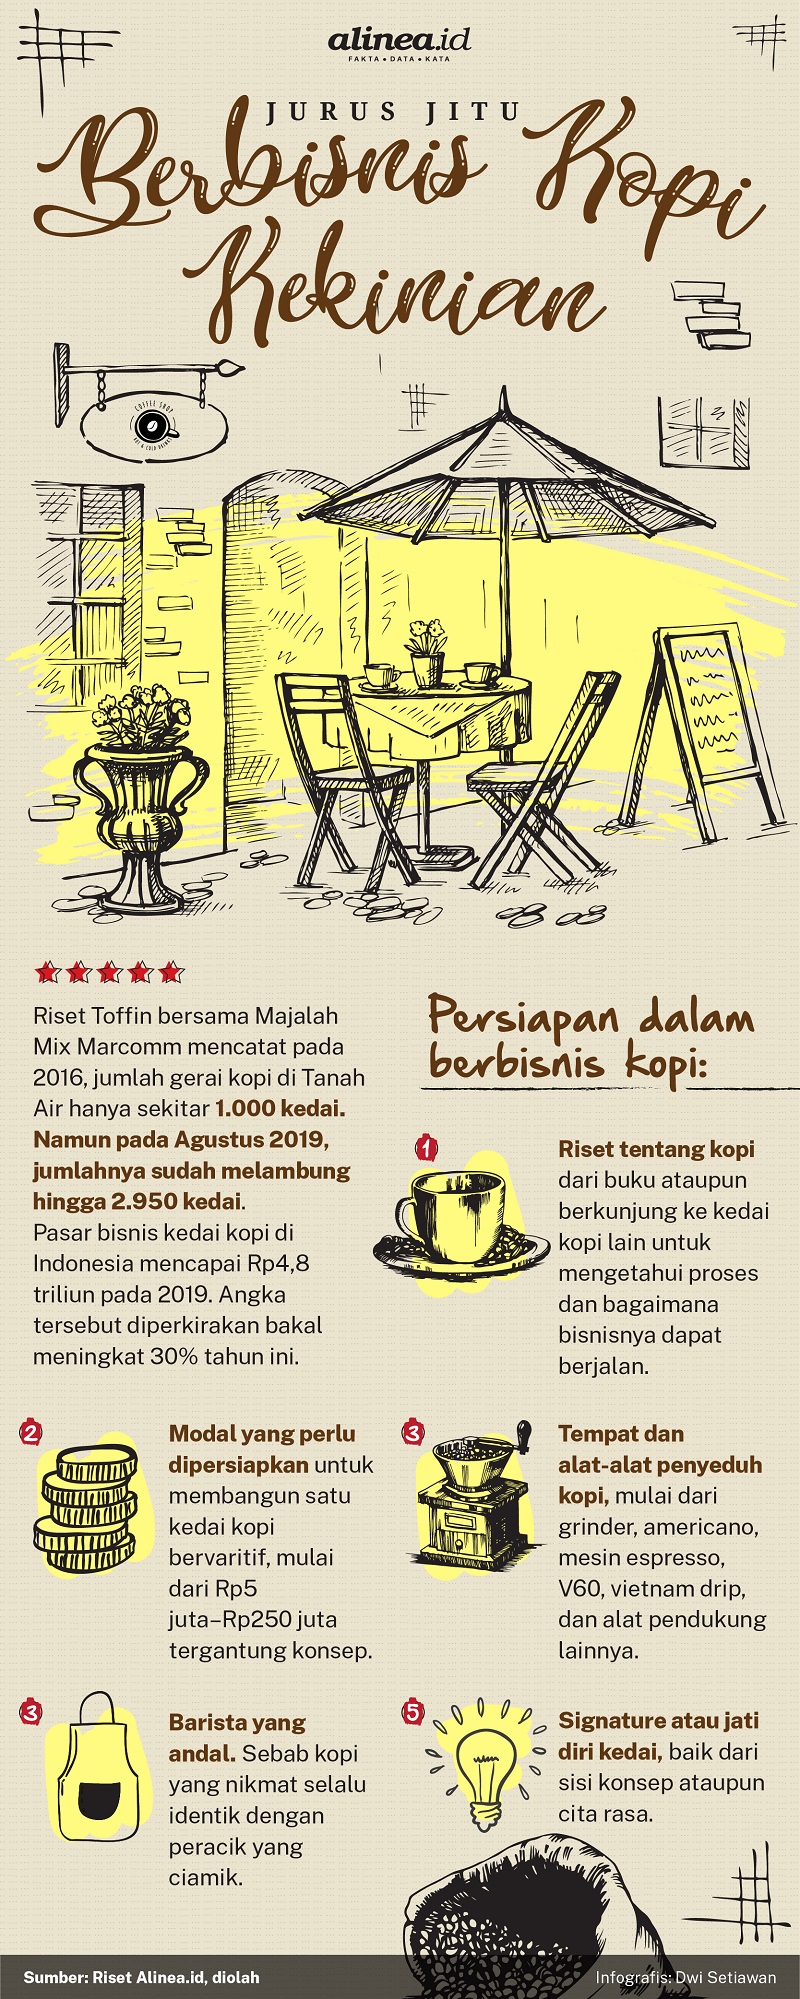 Infografik jurus jitu berbisnis kopi kekinian. Alinea.id/Dwi Setiawan